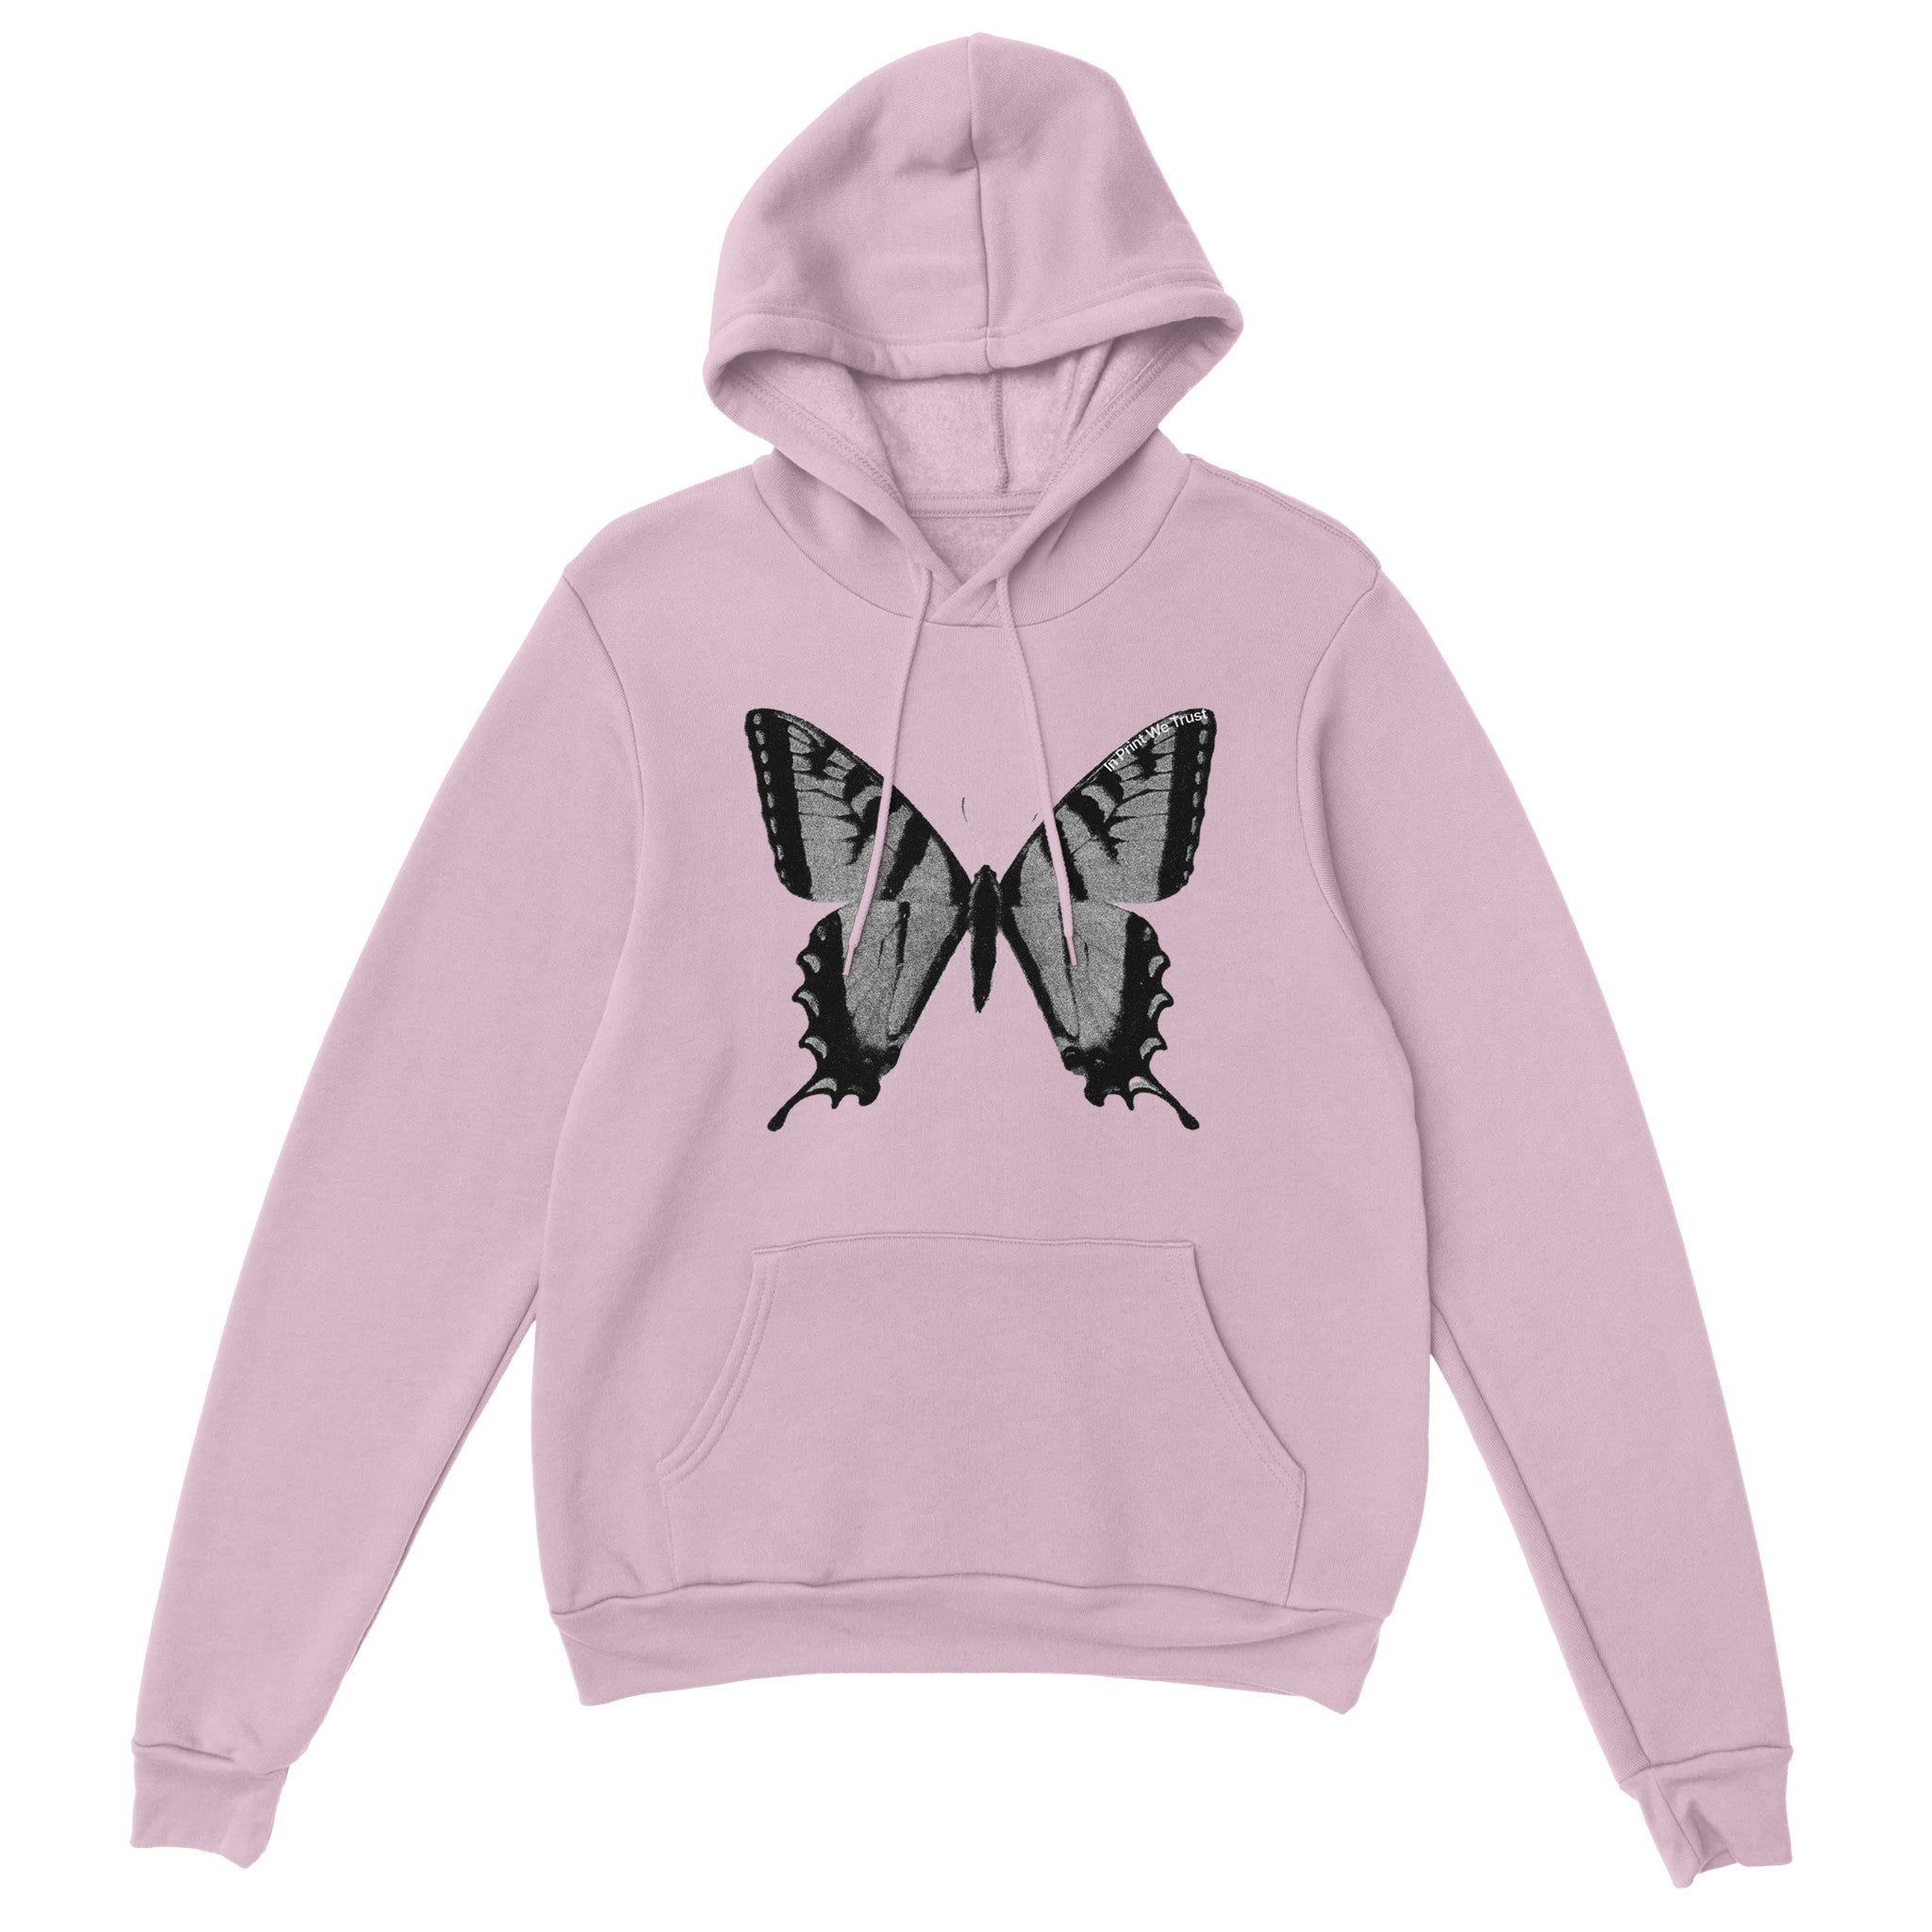 'Butterfly Effect' hoodie - In Print We Trust